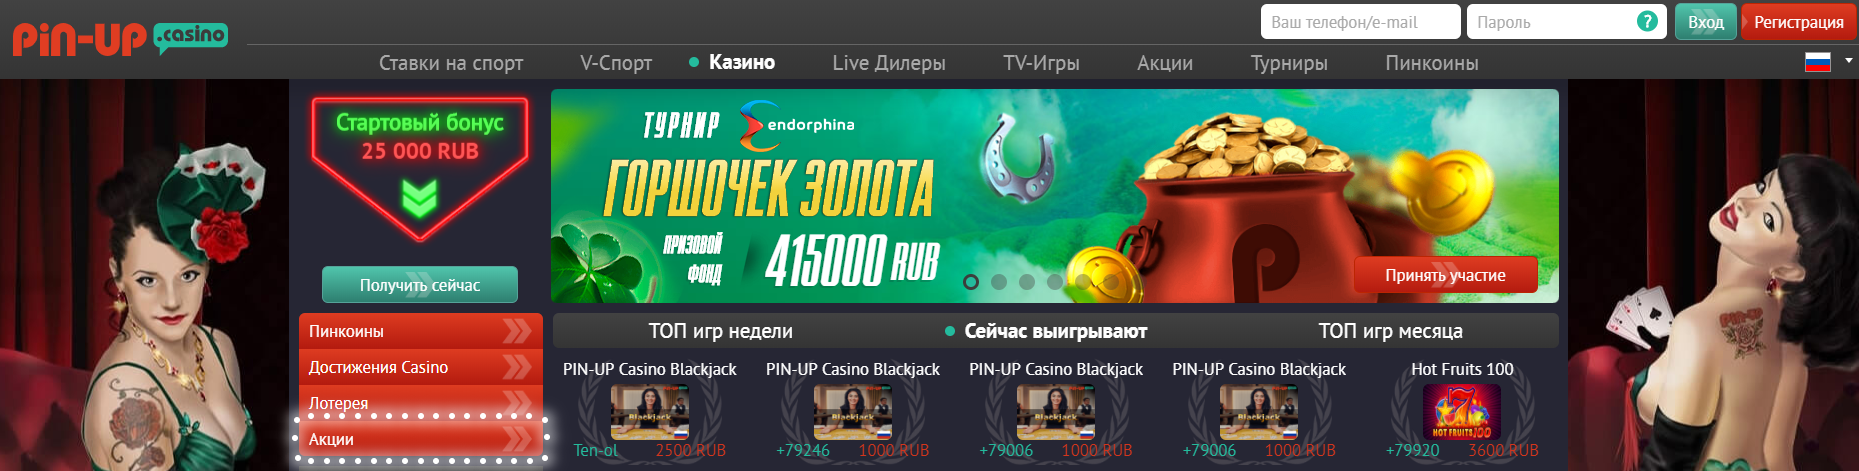 казино pin up отзывы casinopinup online